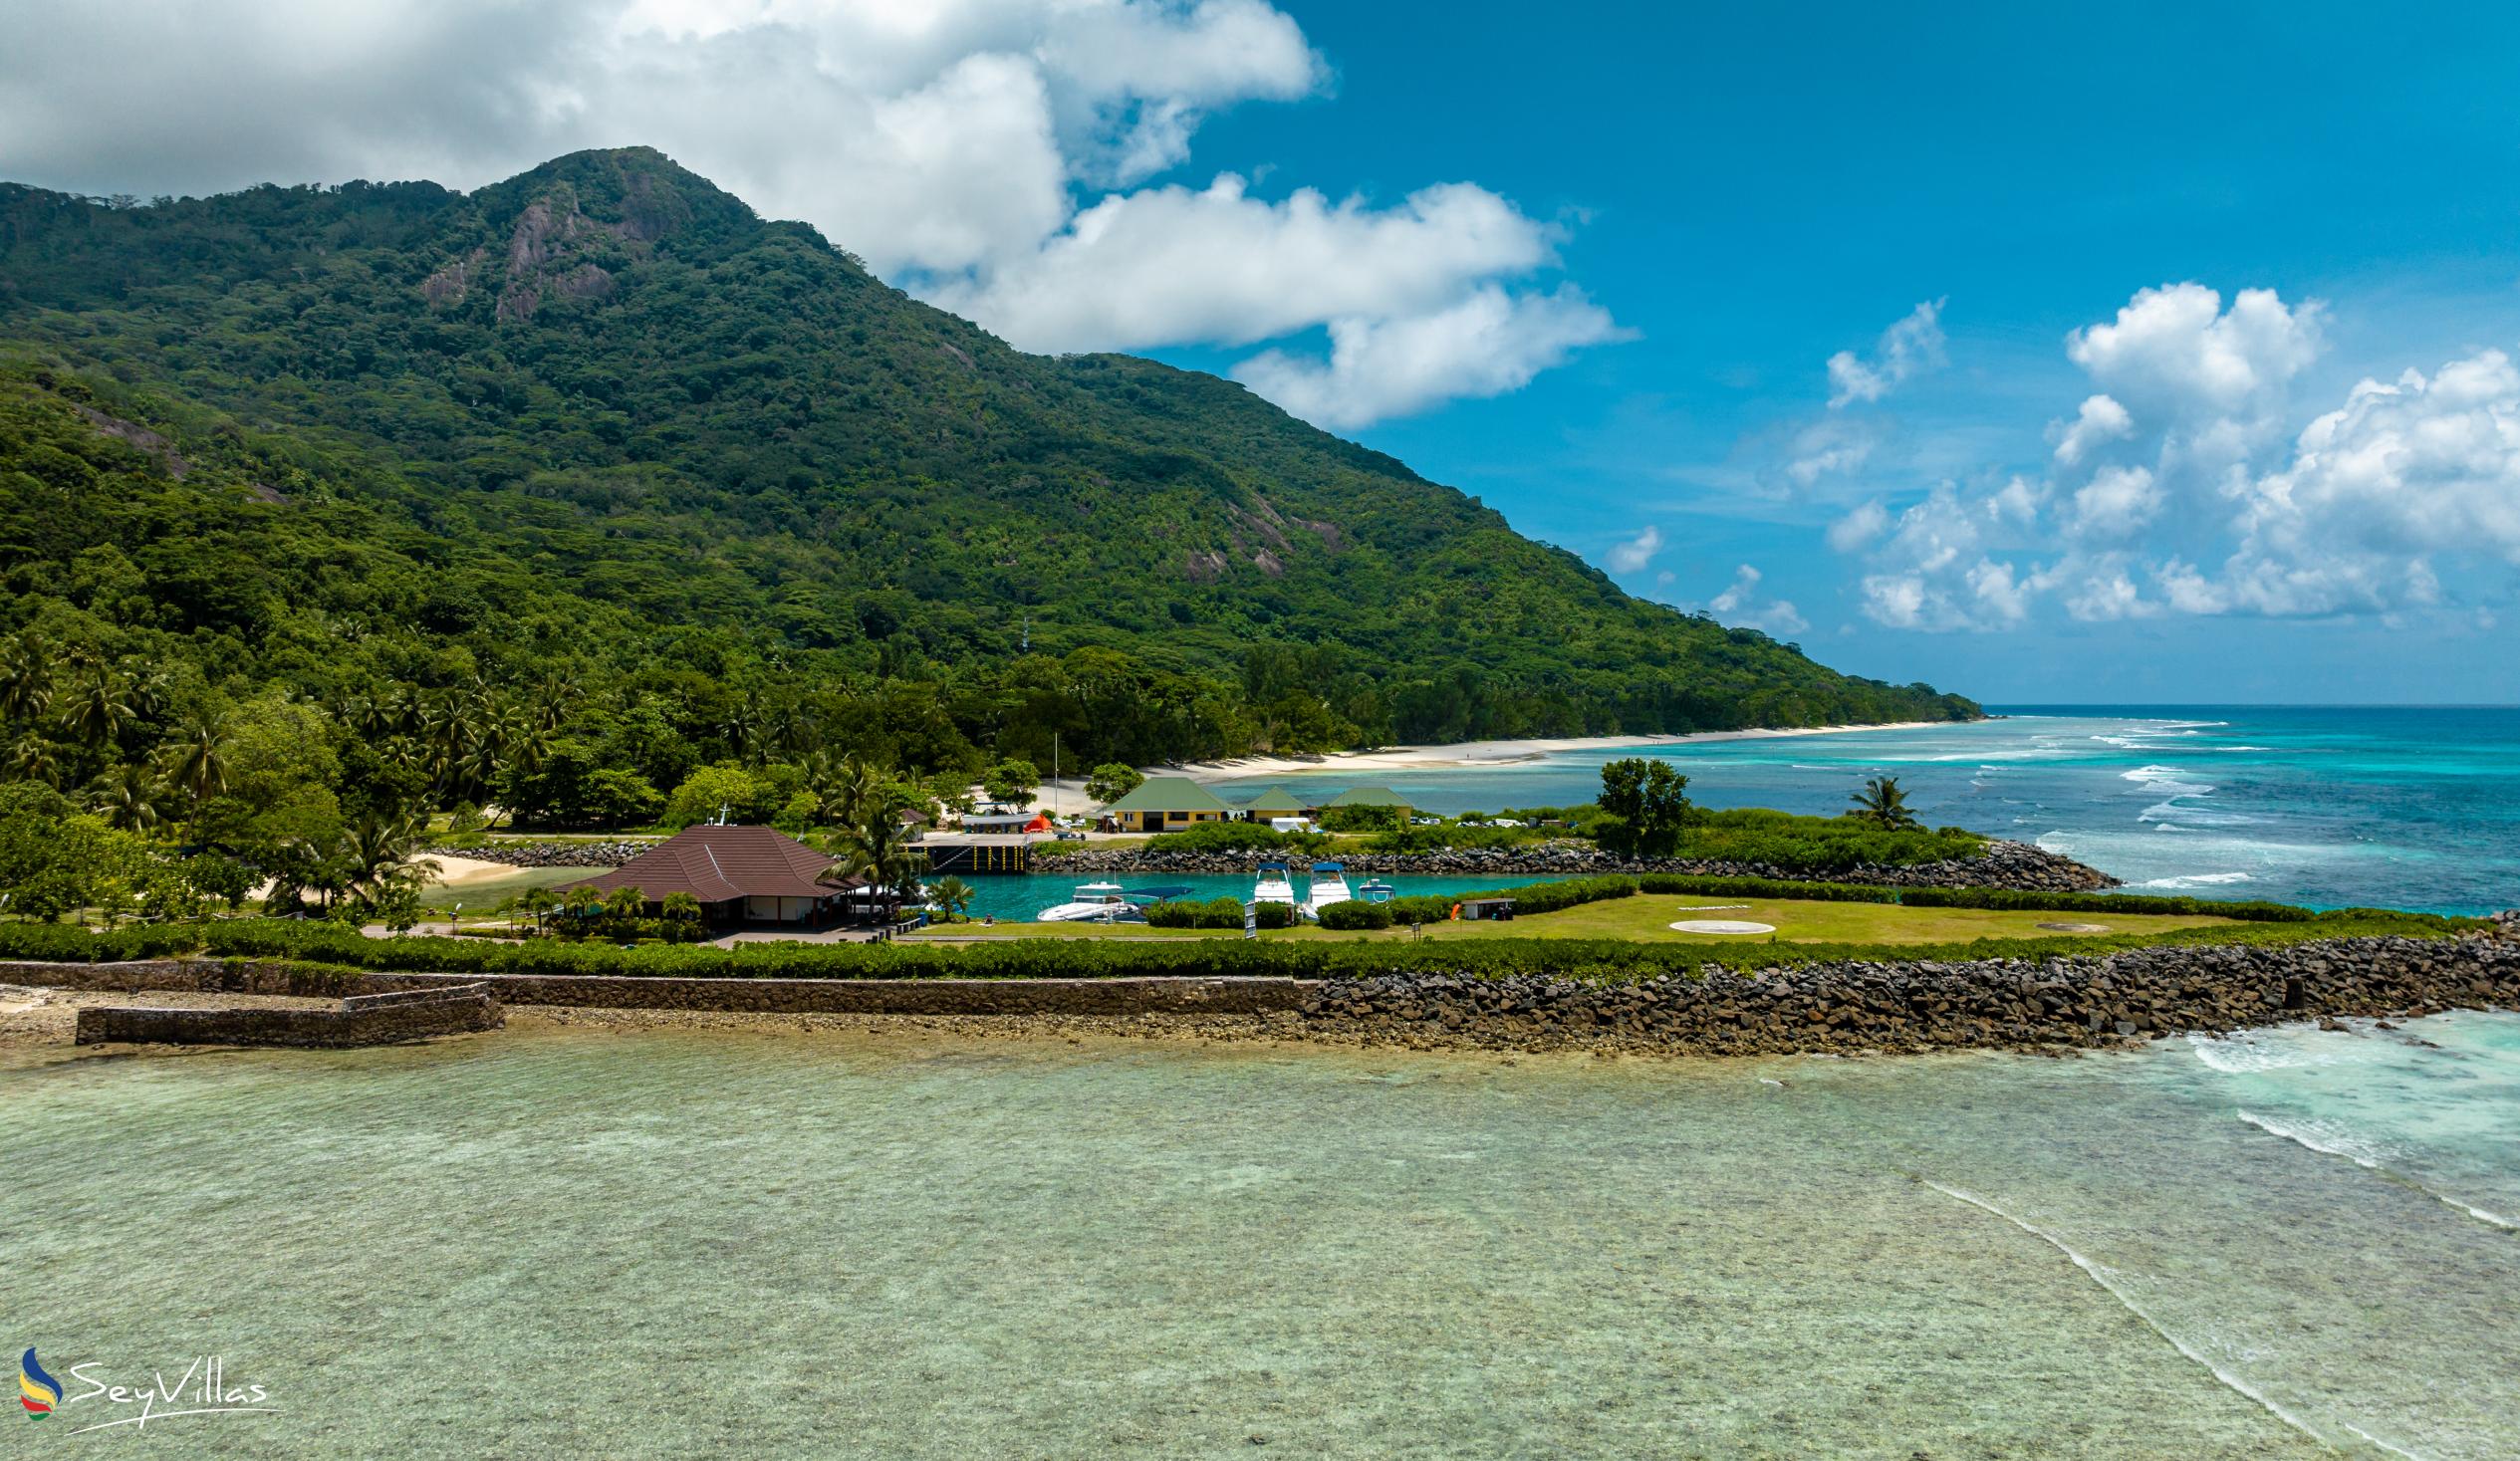 Photo 103: La Belle Tortue - Location - Silhouette Island (Seychelles)